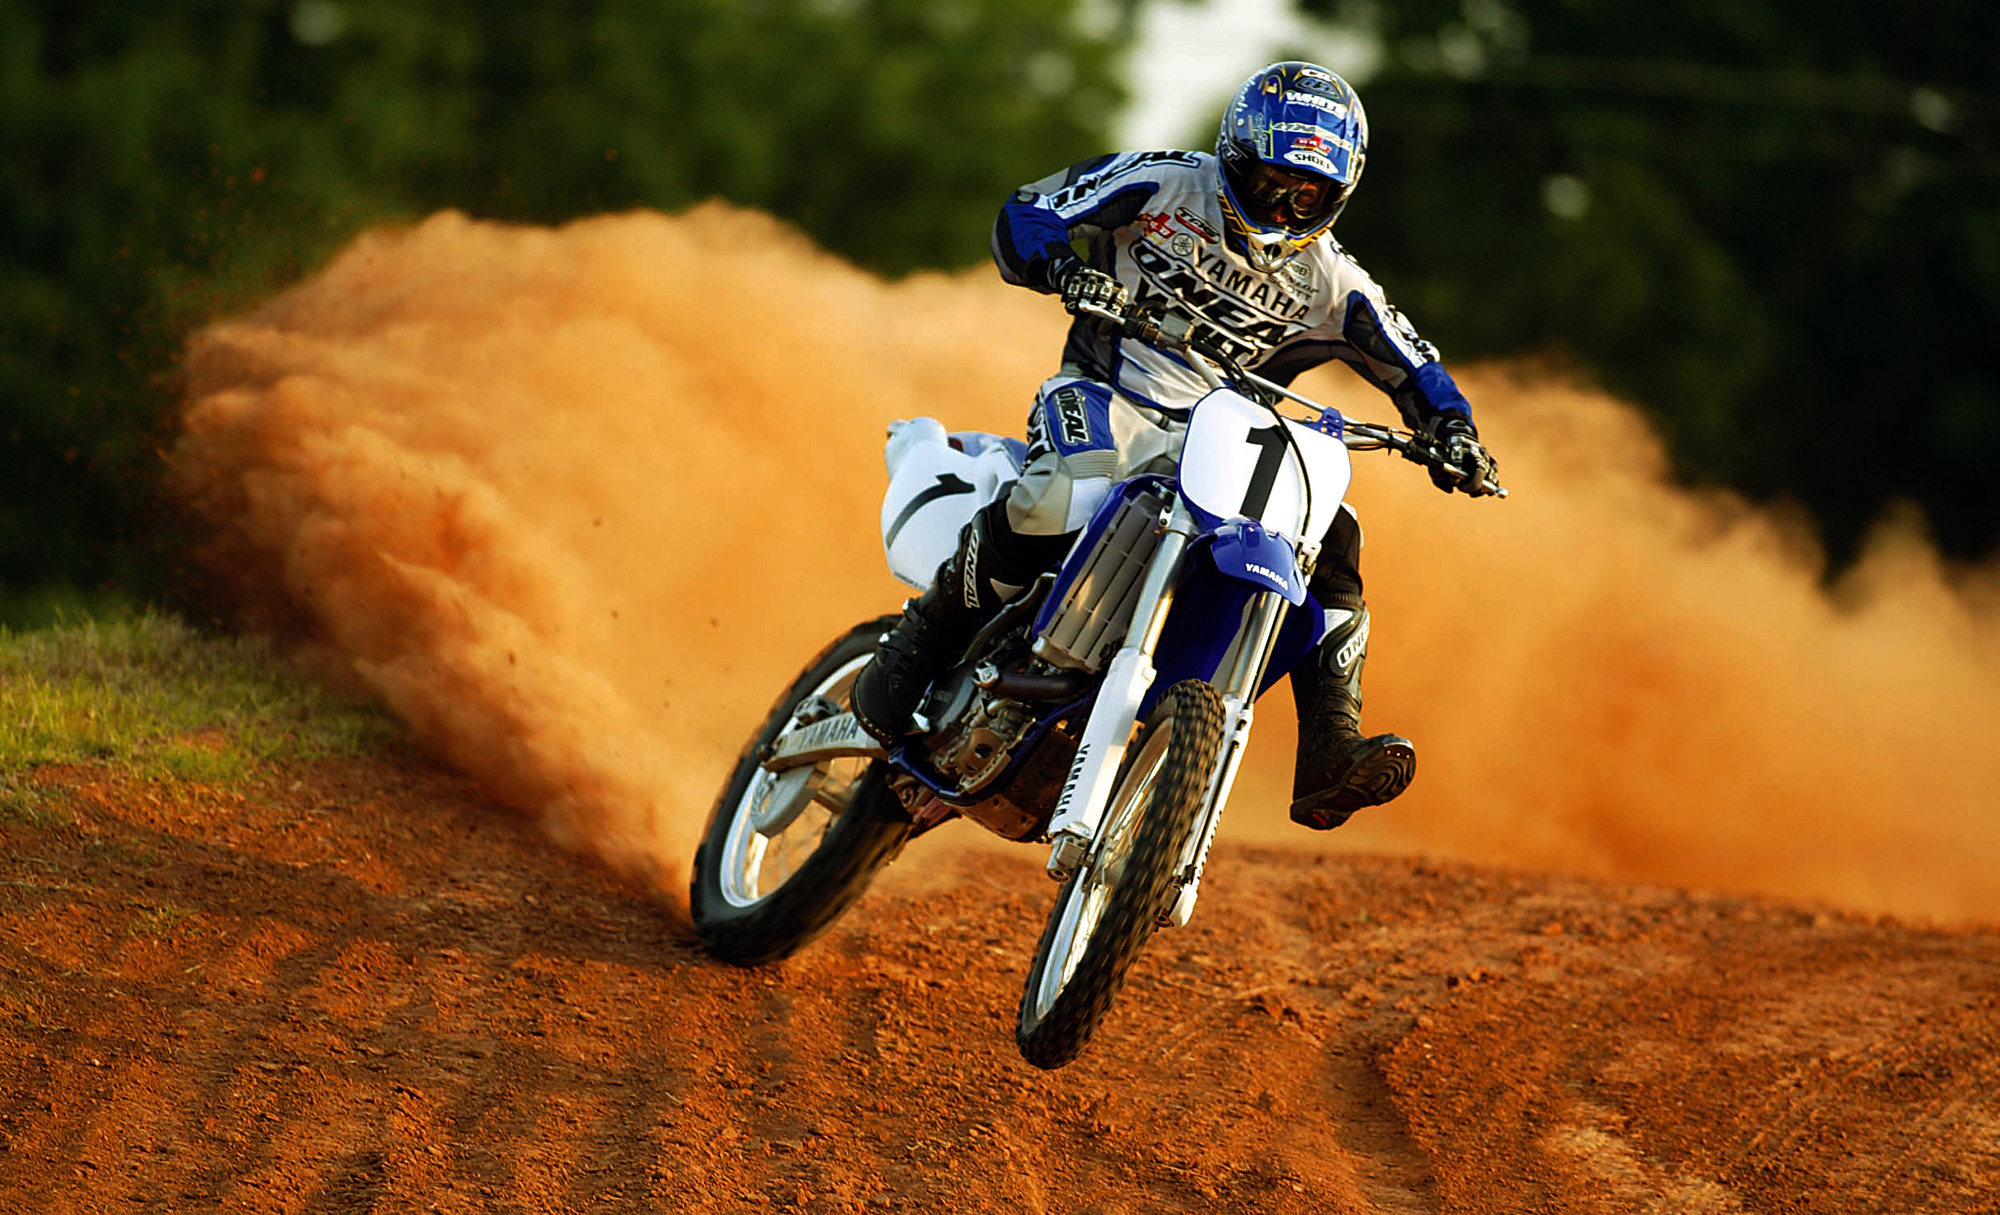 Yamaha Dirt Bikes Motocross Wallpaper Hd | Hd Wallpapers